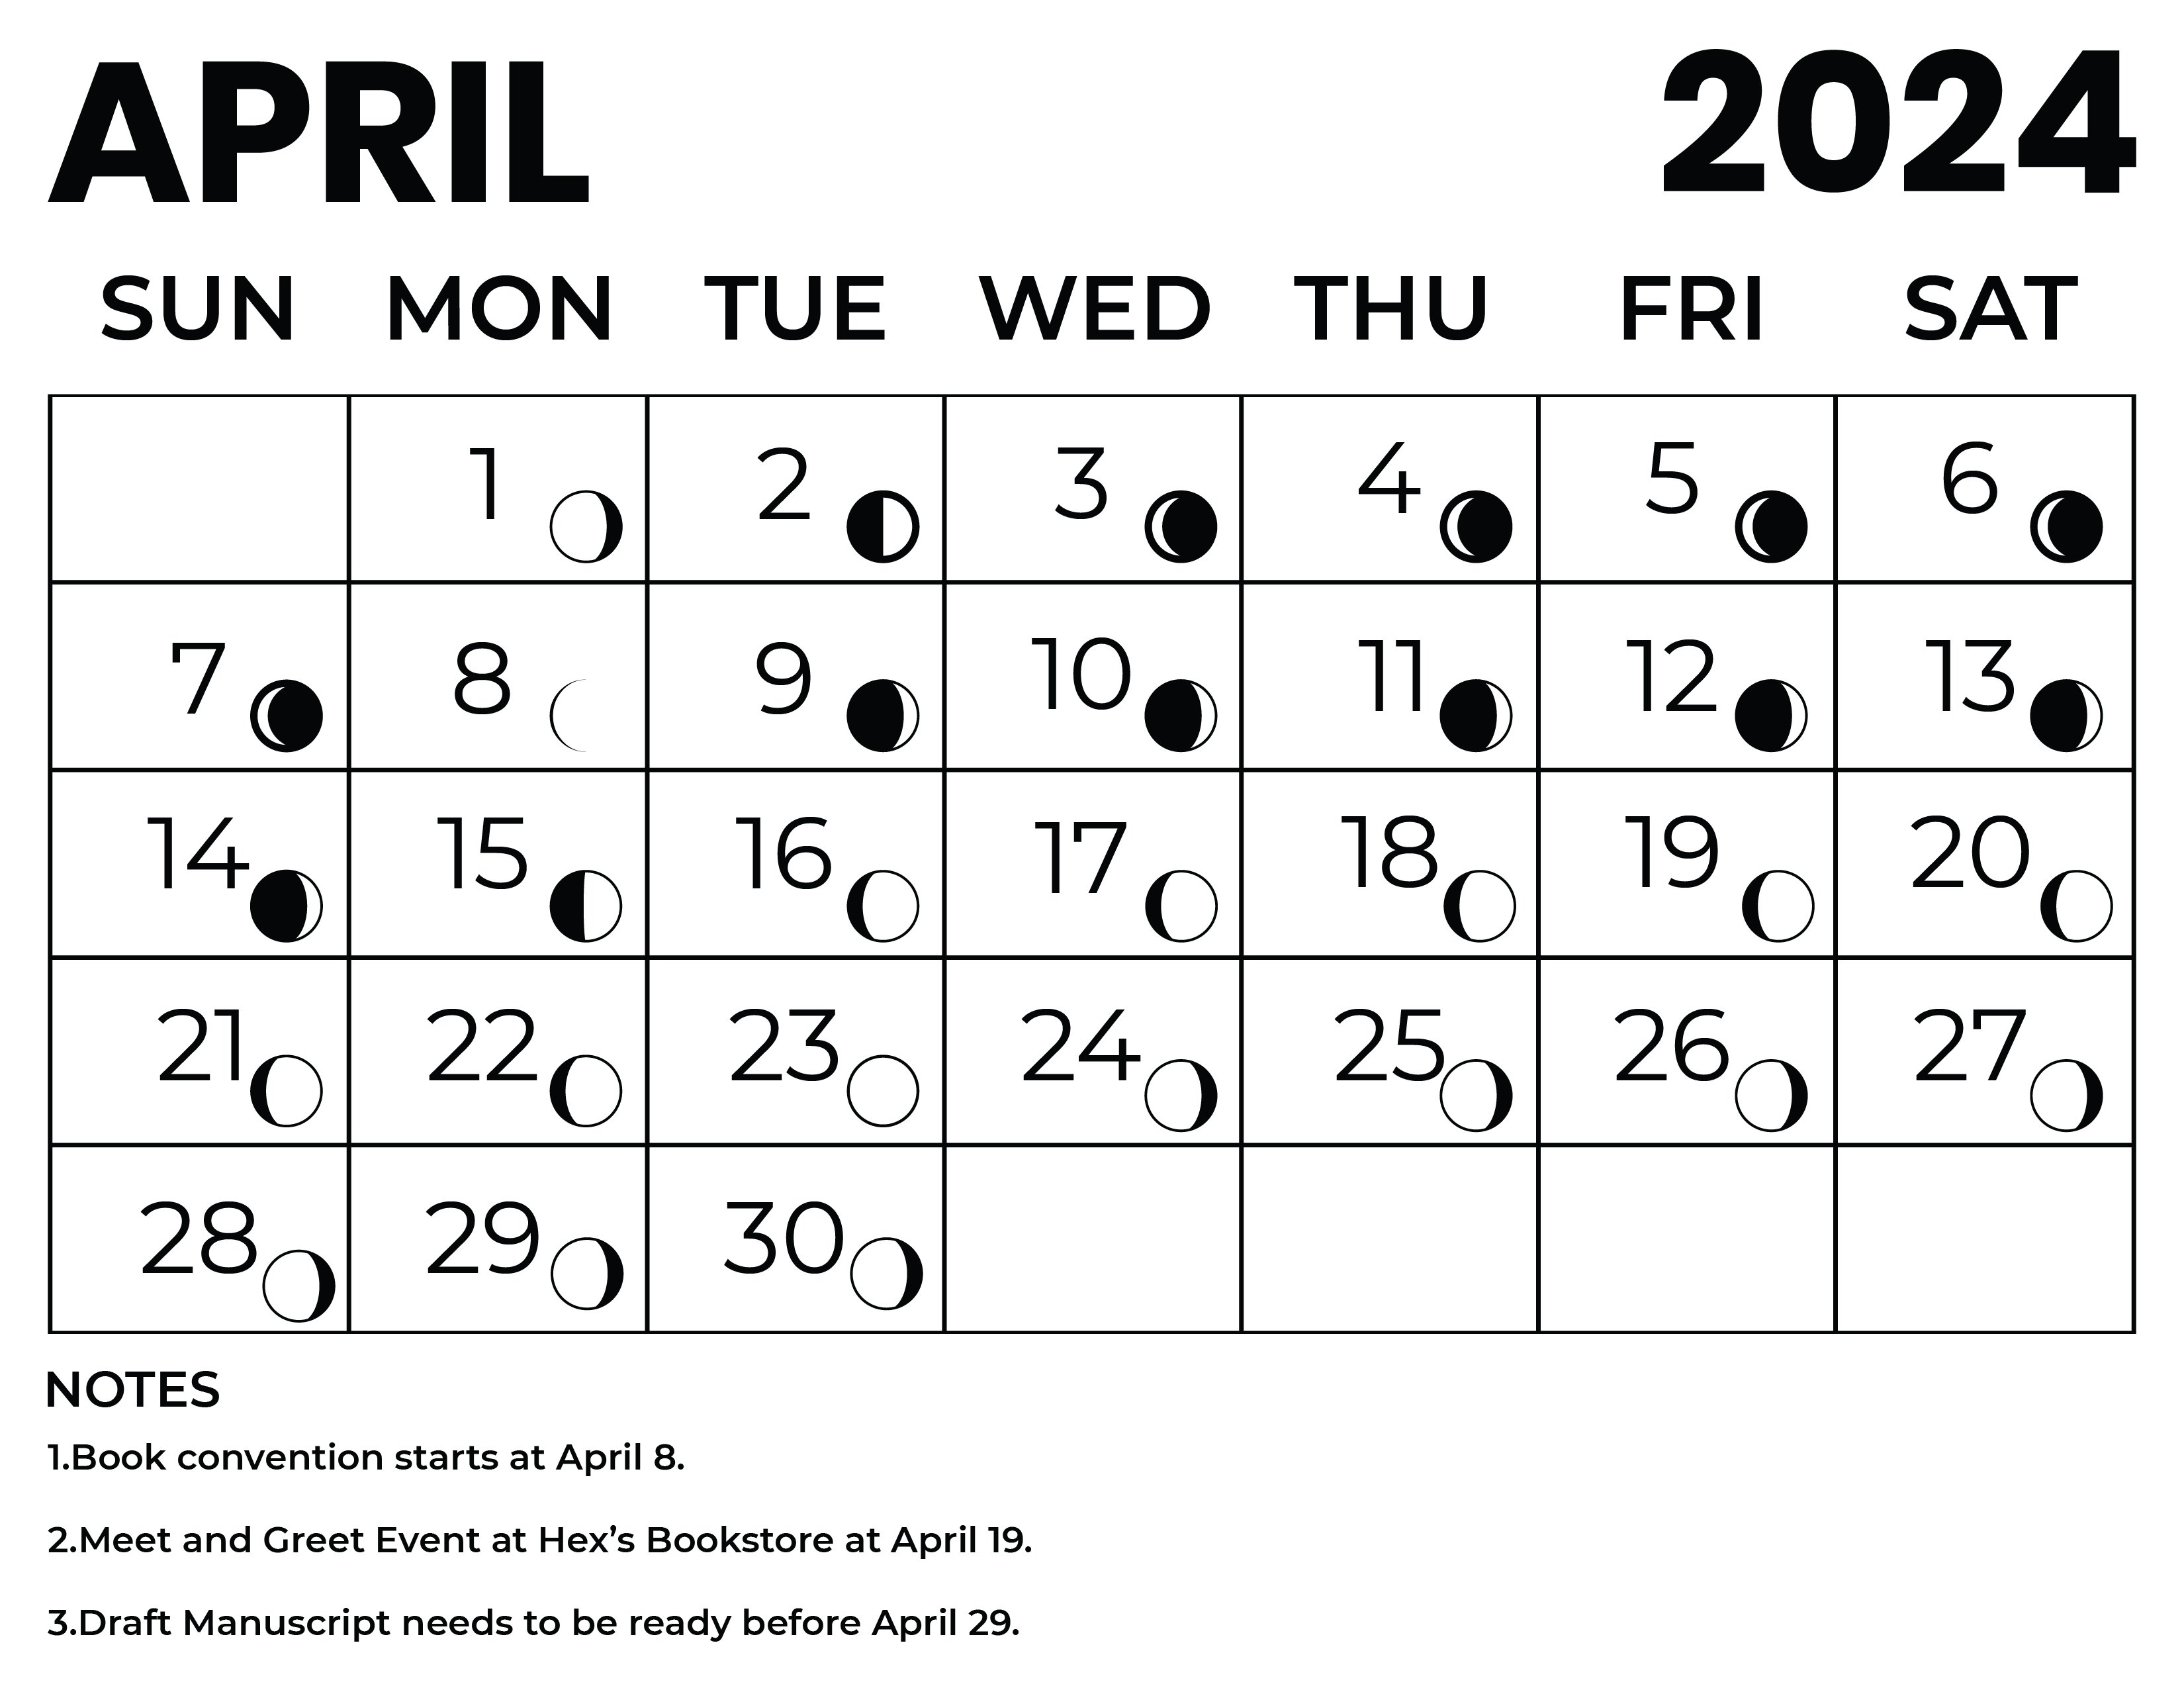 Moon Schedule April 2024 Ambur Bettine